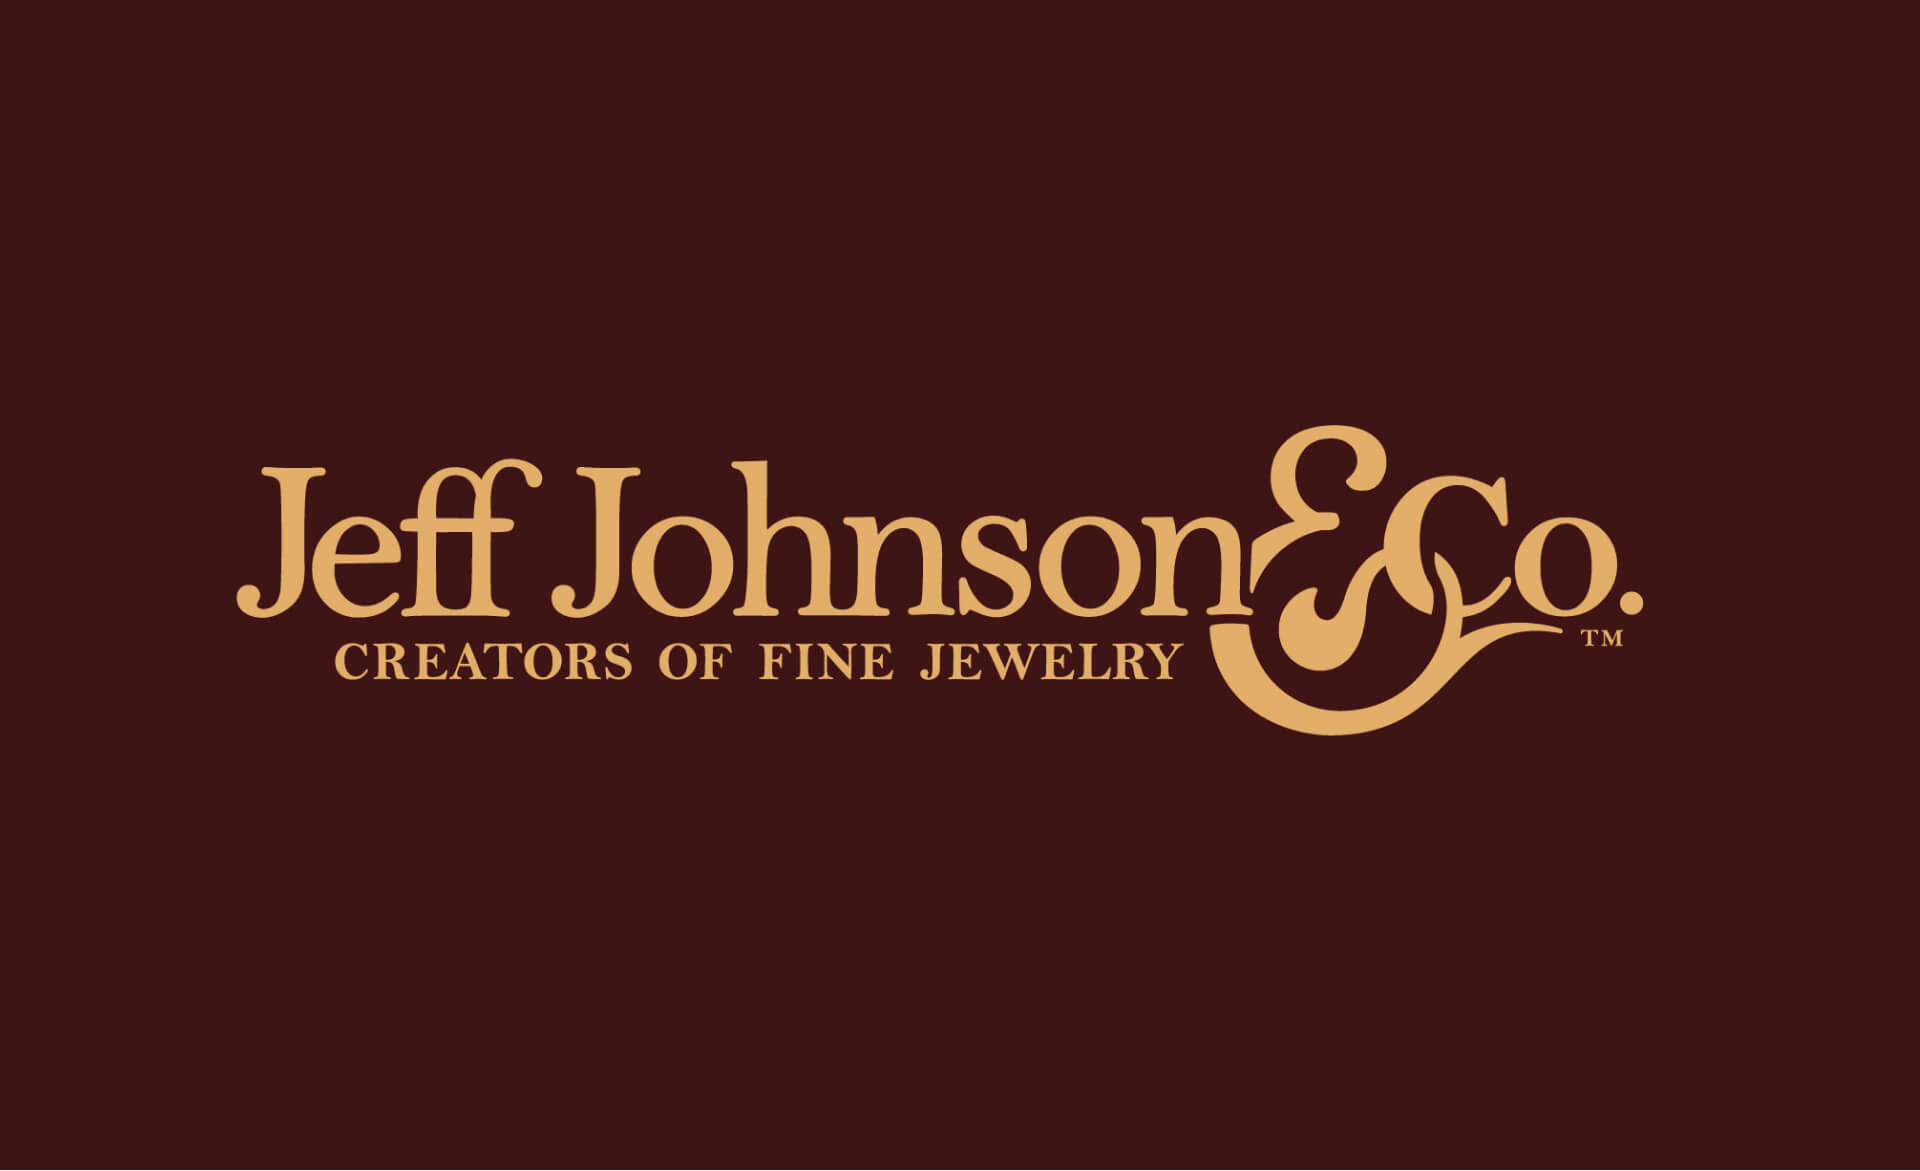 Jeff Johnson & Co